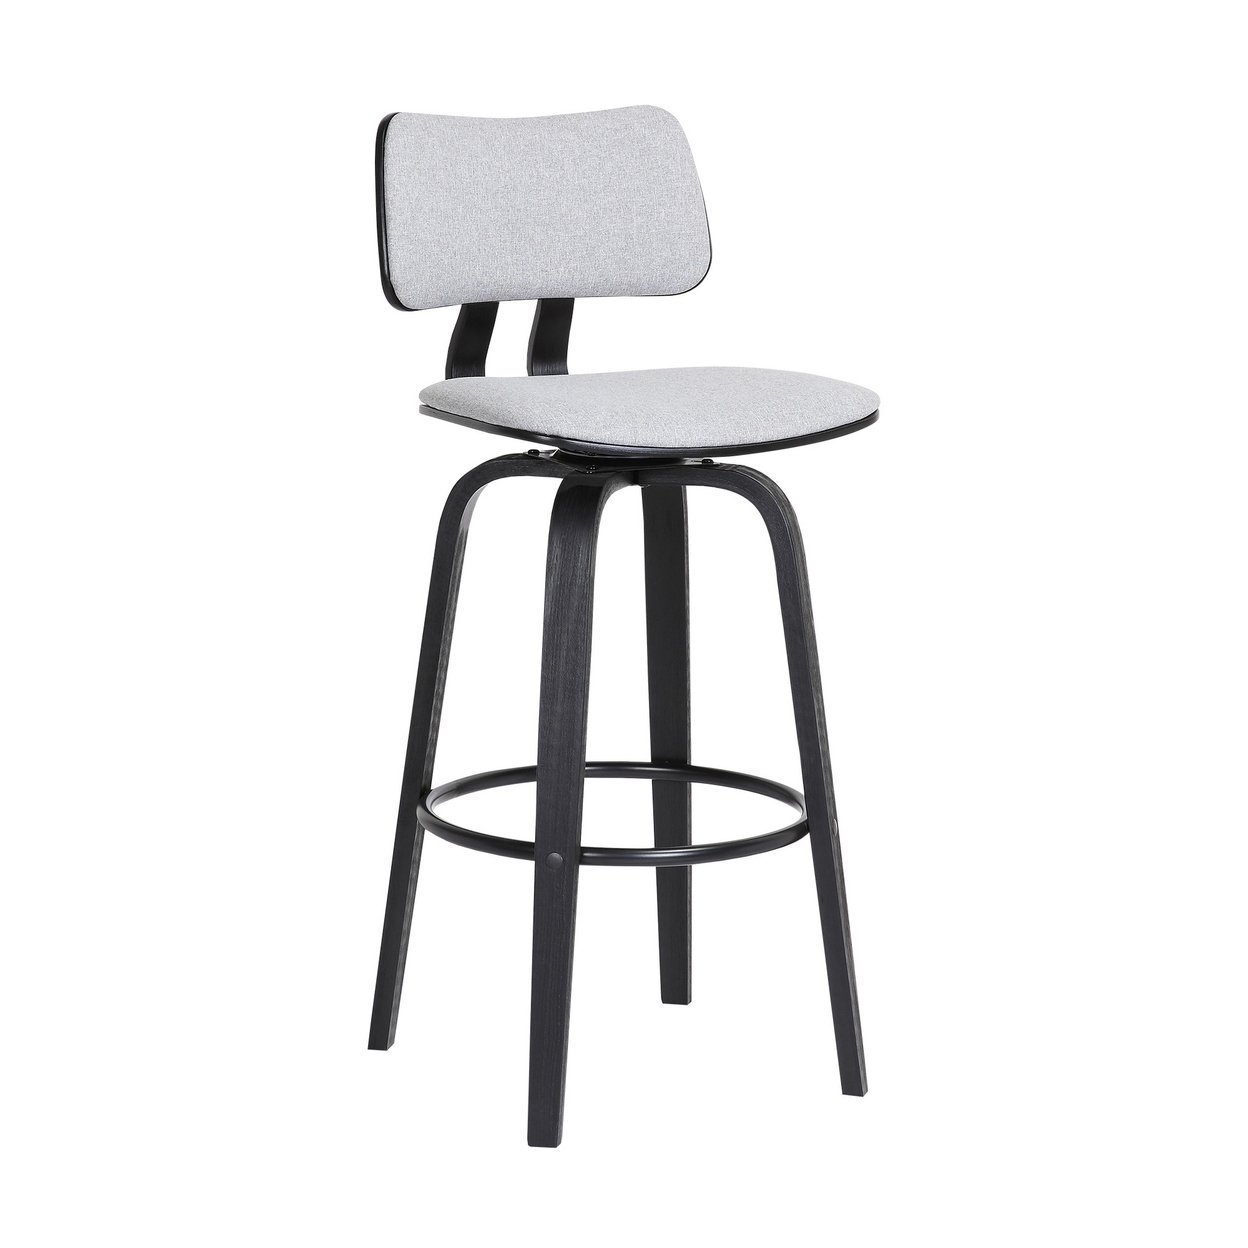 Pino 30 Inch Swivel Barstool Chair, Light Gray Fabric, Black Wood Frame - Saltoro Sherpi